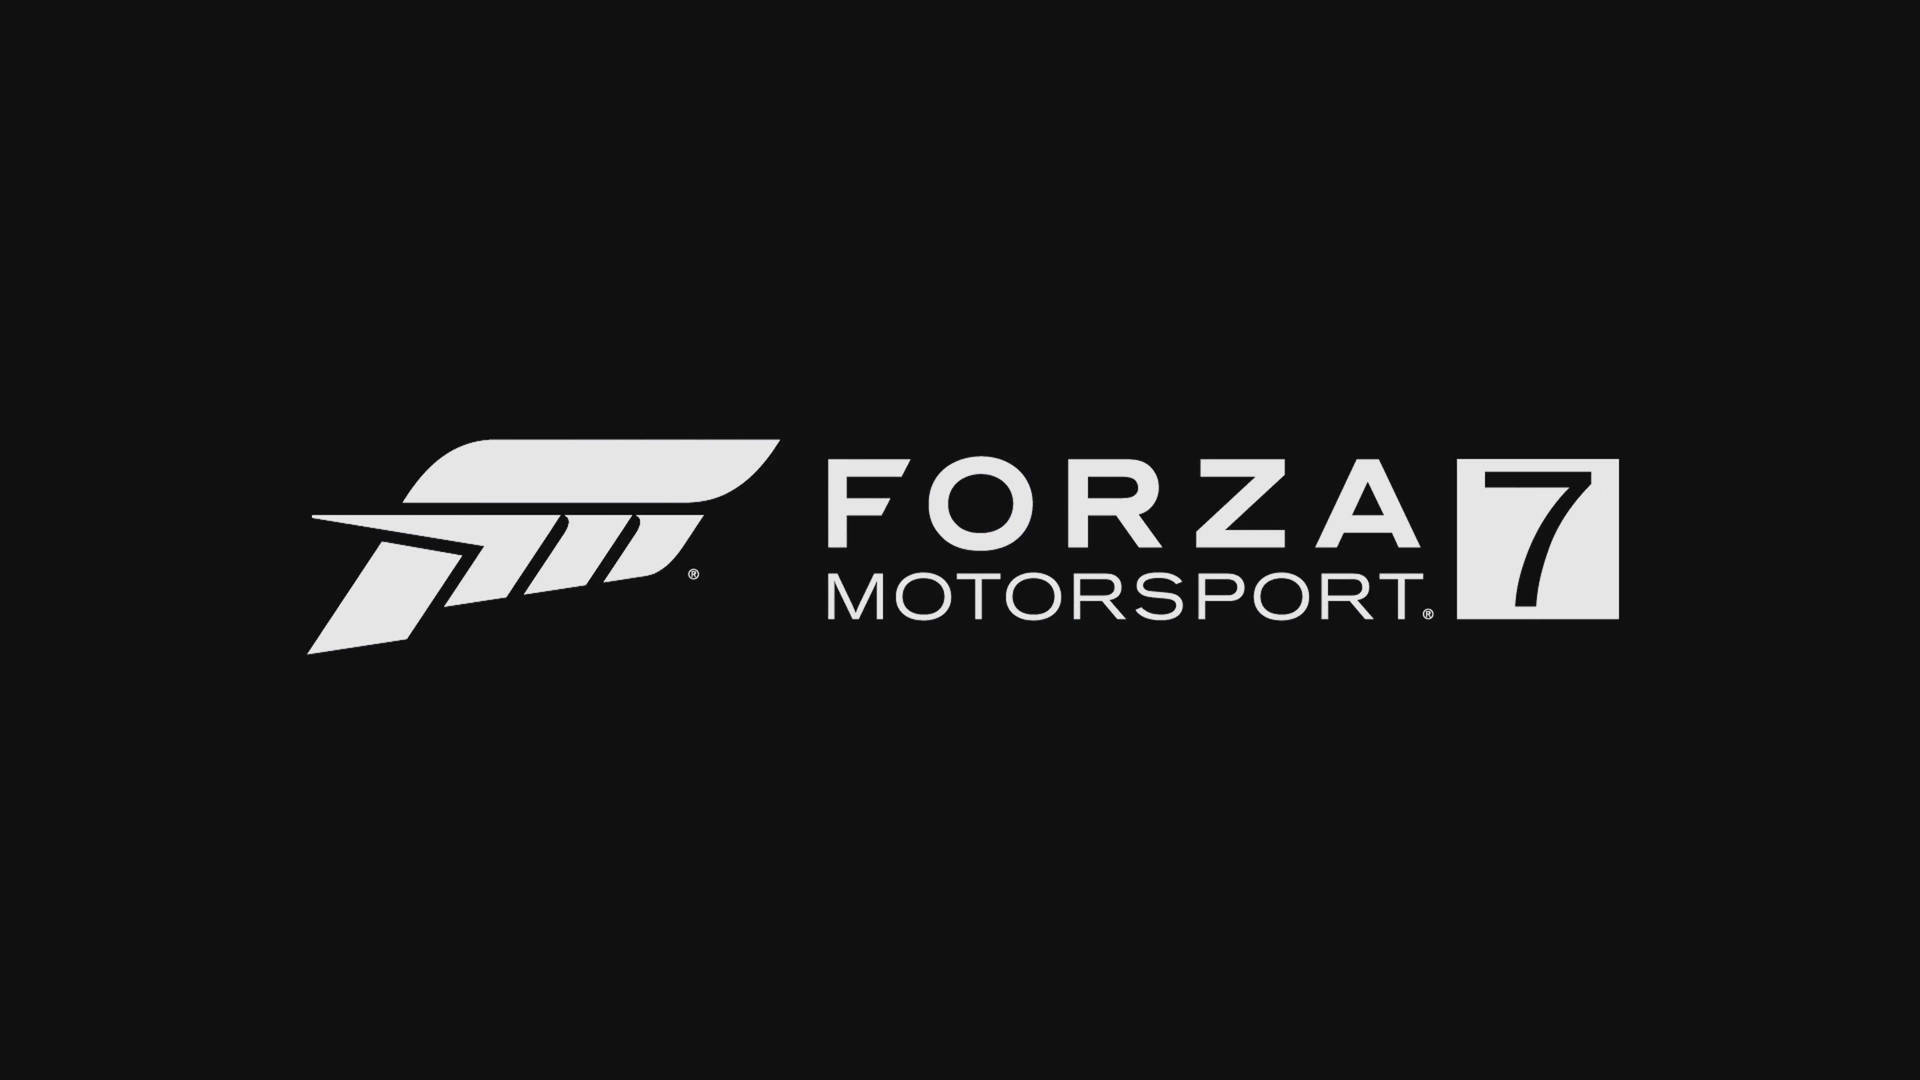 Forza 7 Motorsport Logotyp Wallpaper